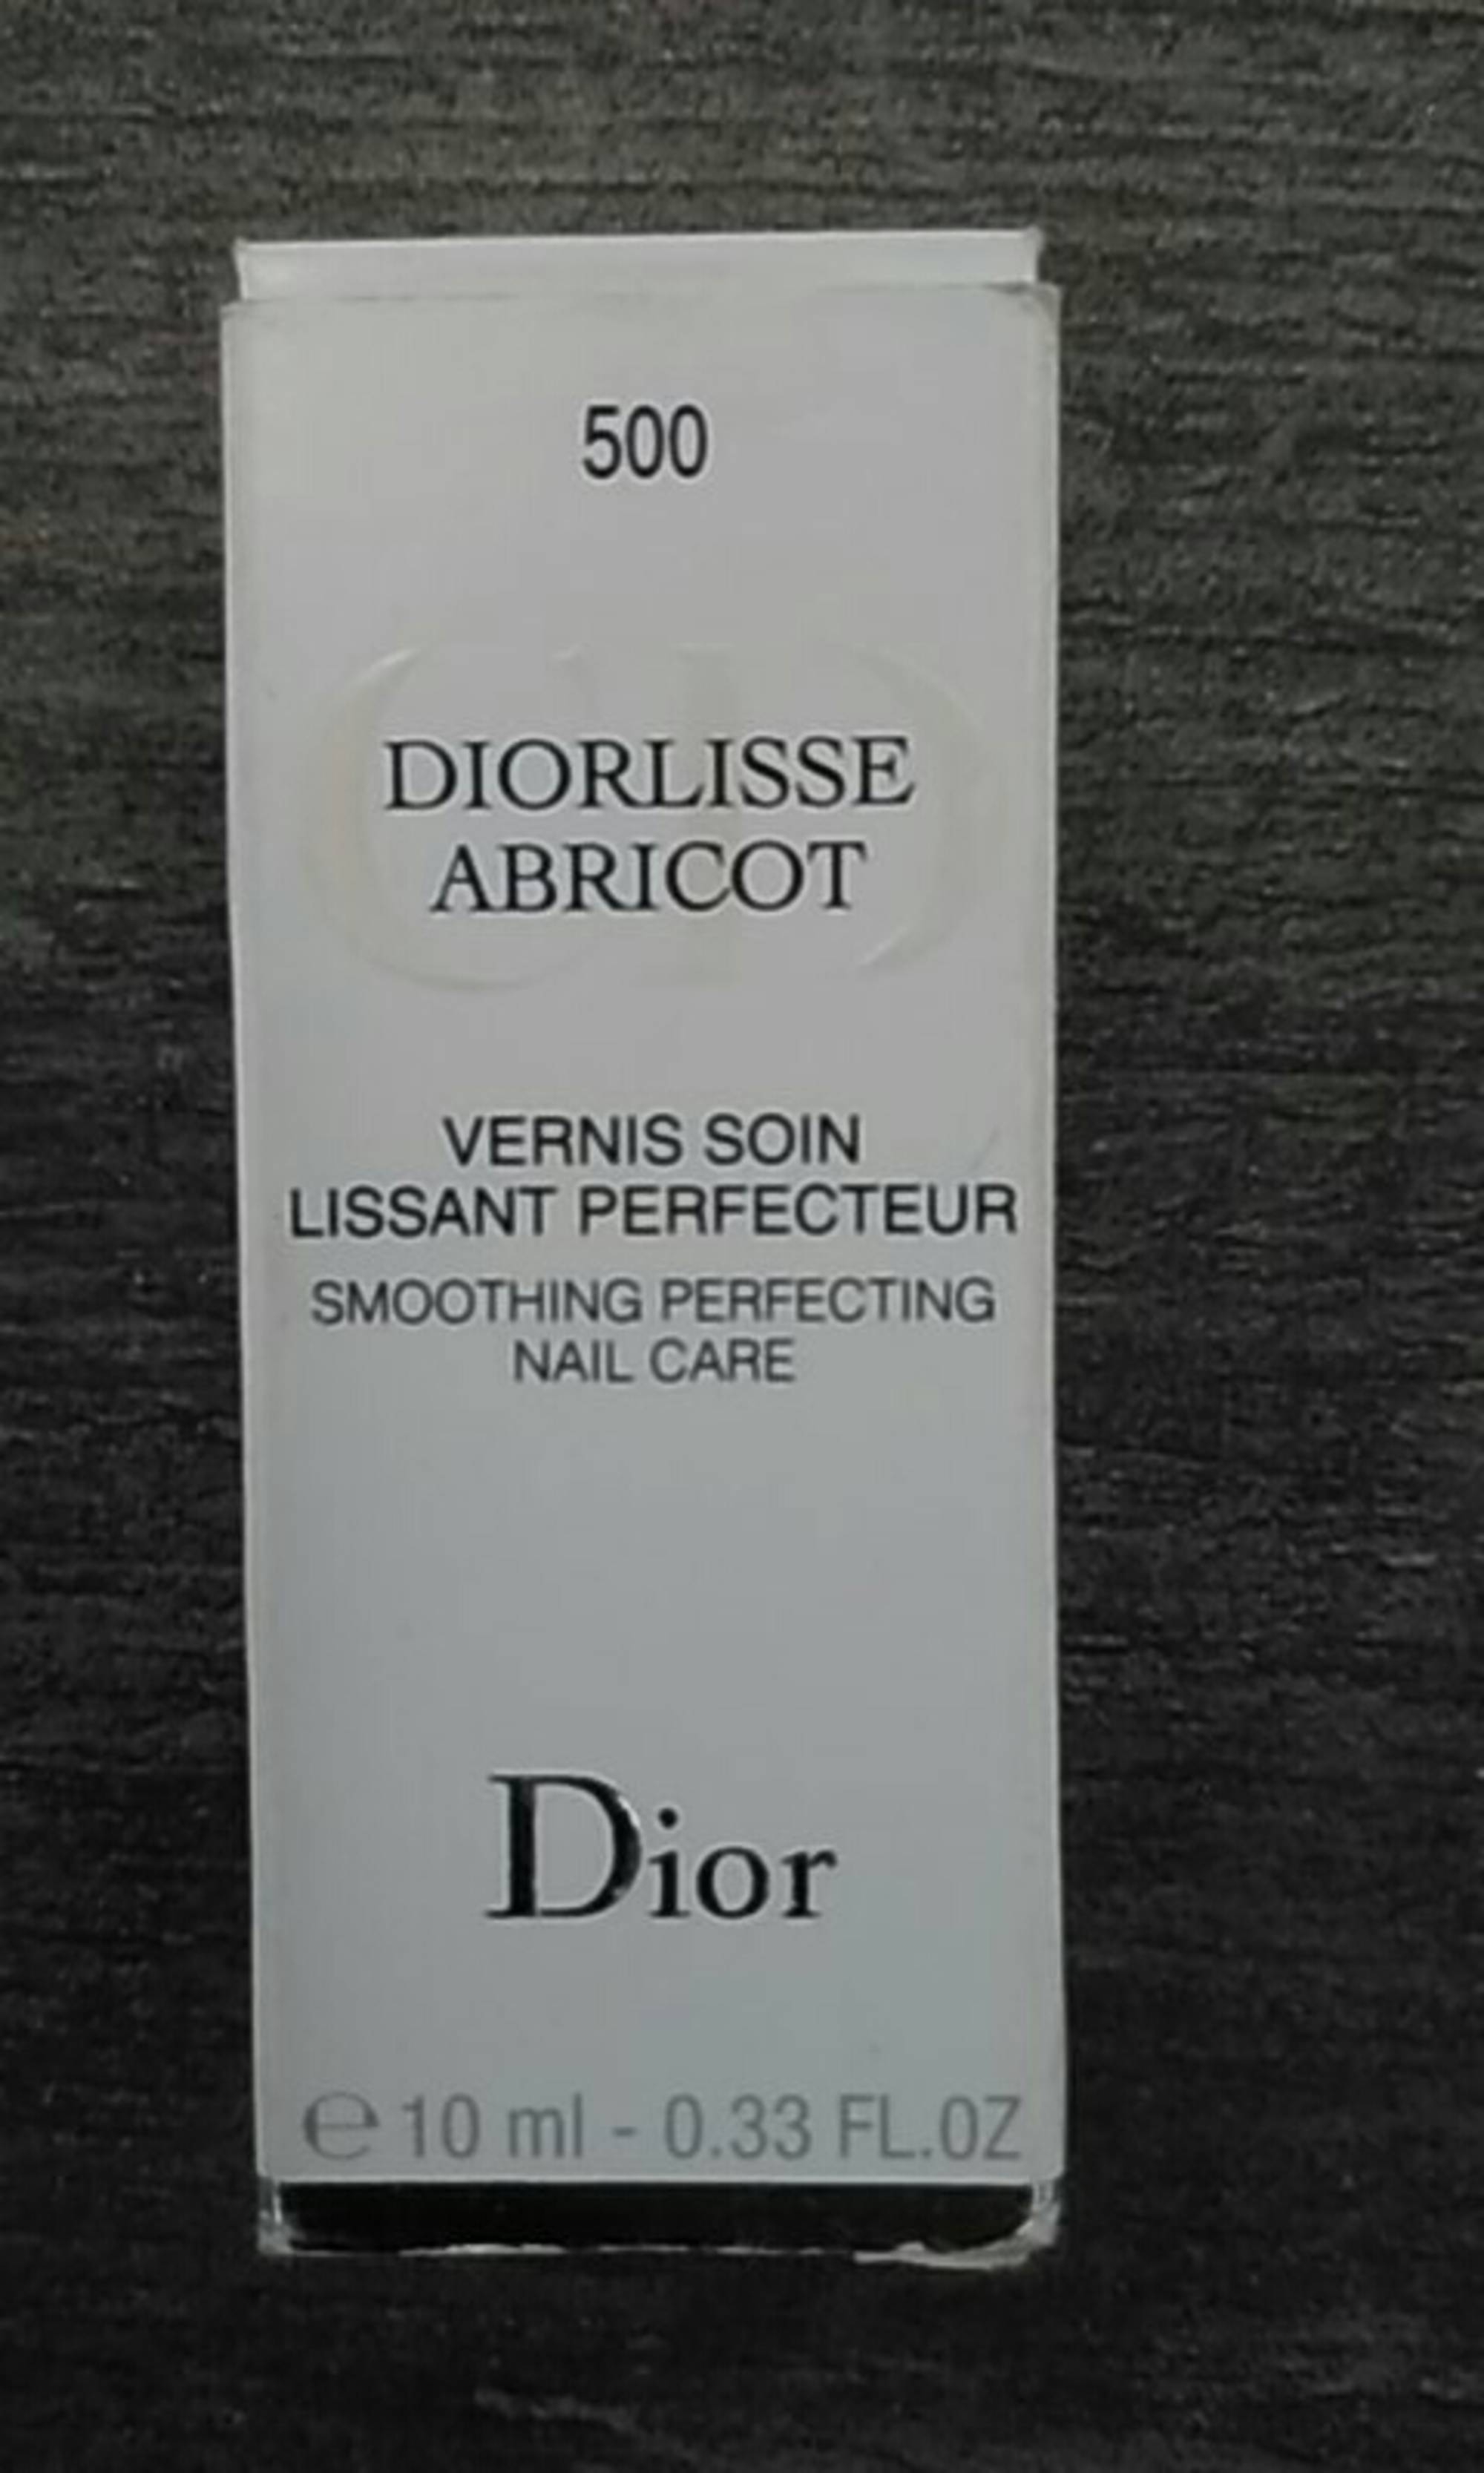 DIOR - Diorlisse abricot - Vernis soin lissant perfecteur